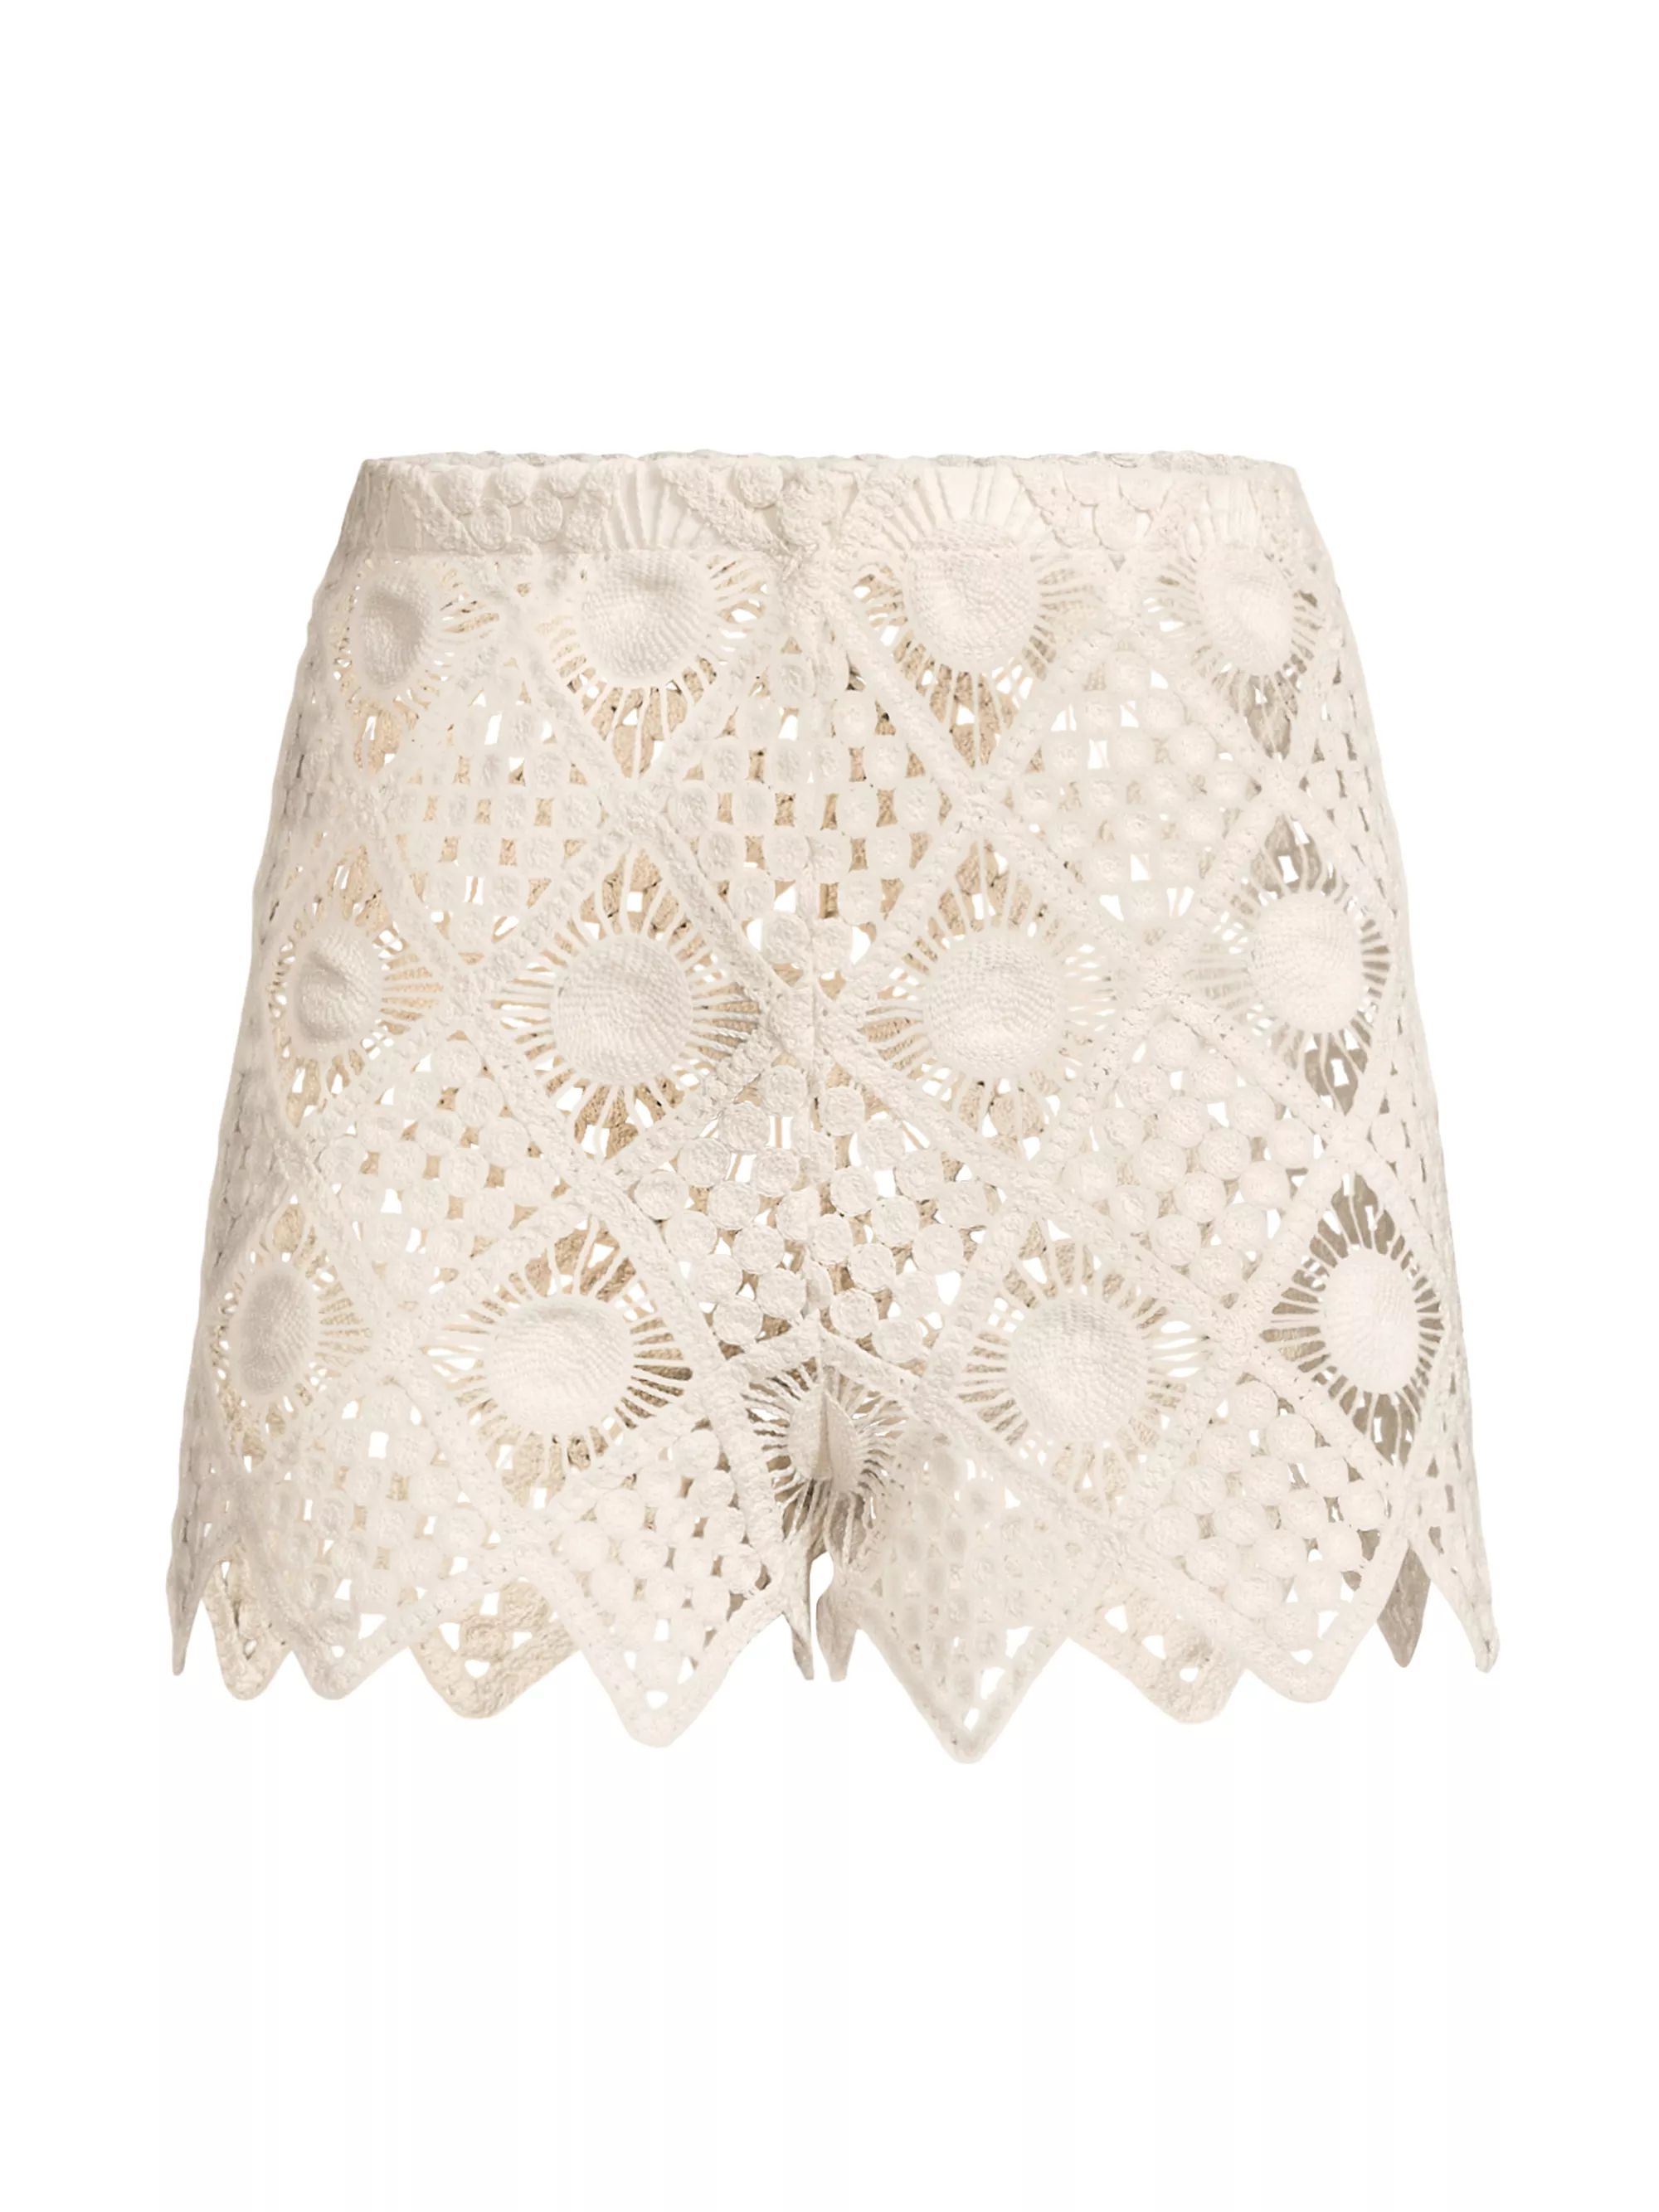 Playa Crochet Cover-Up Shorts | Saks Fifth Avenue